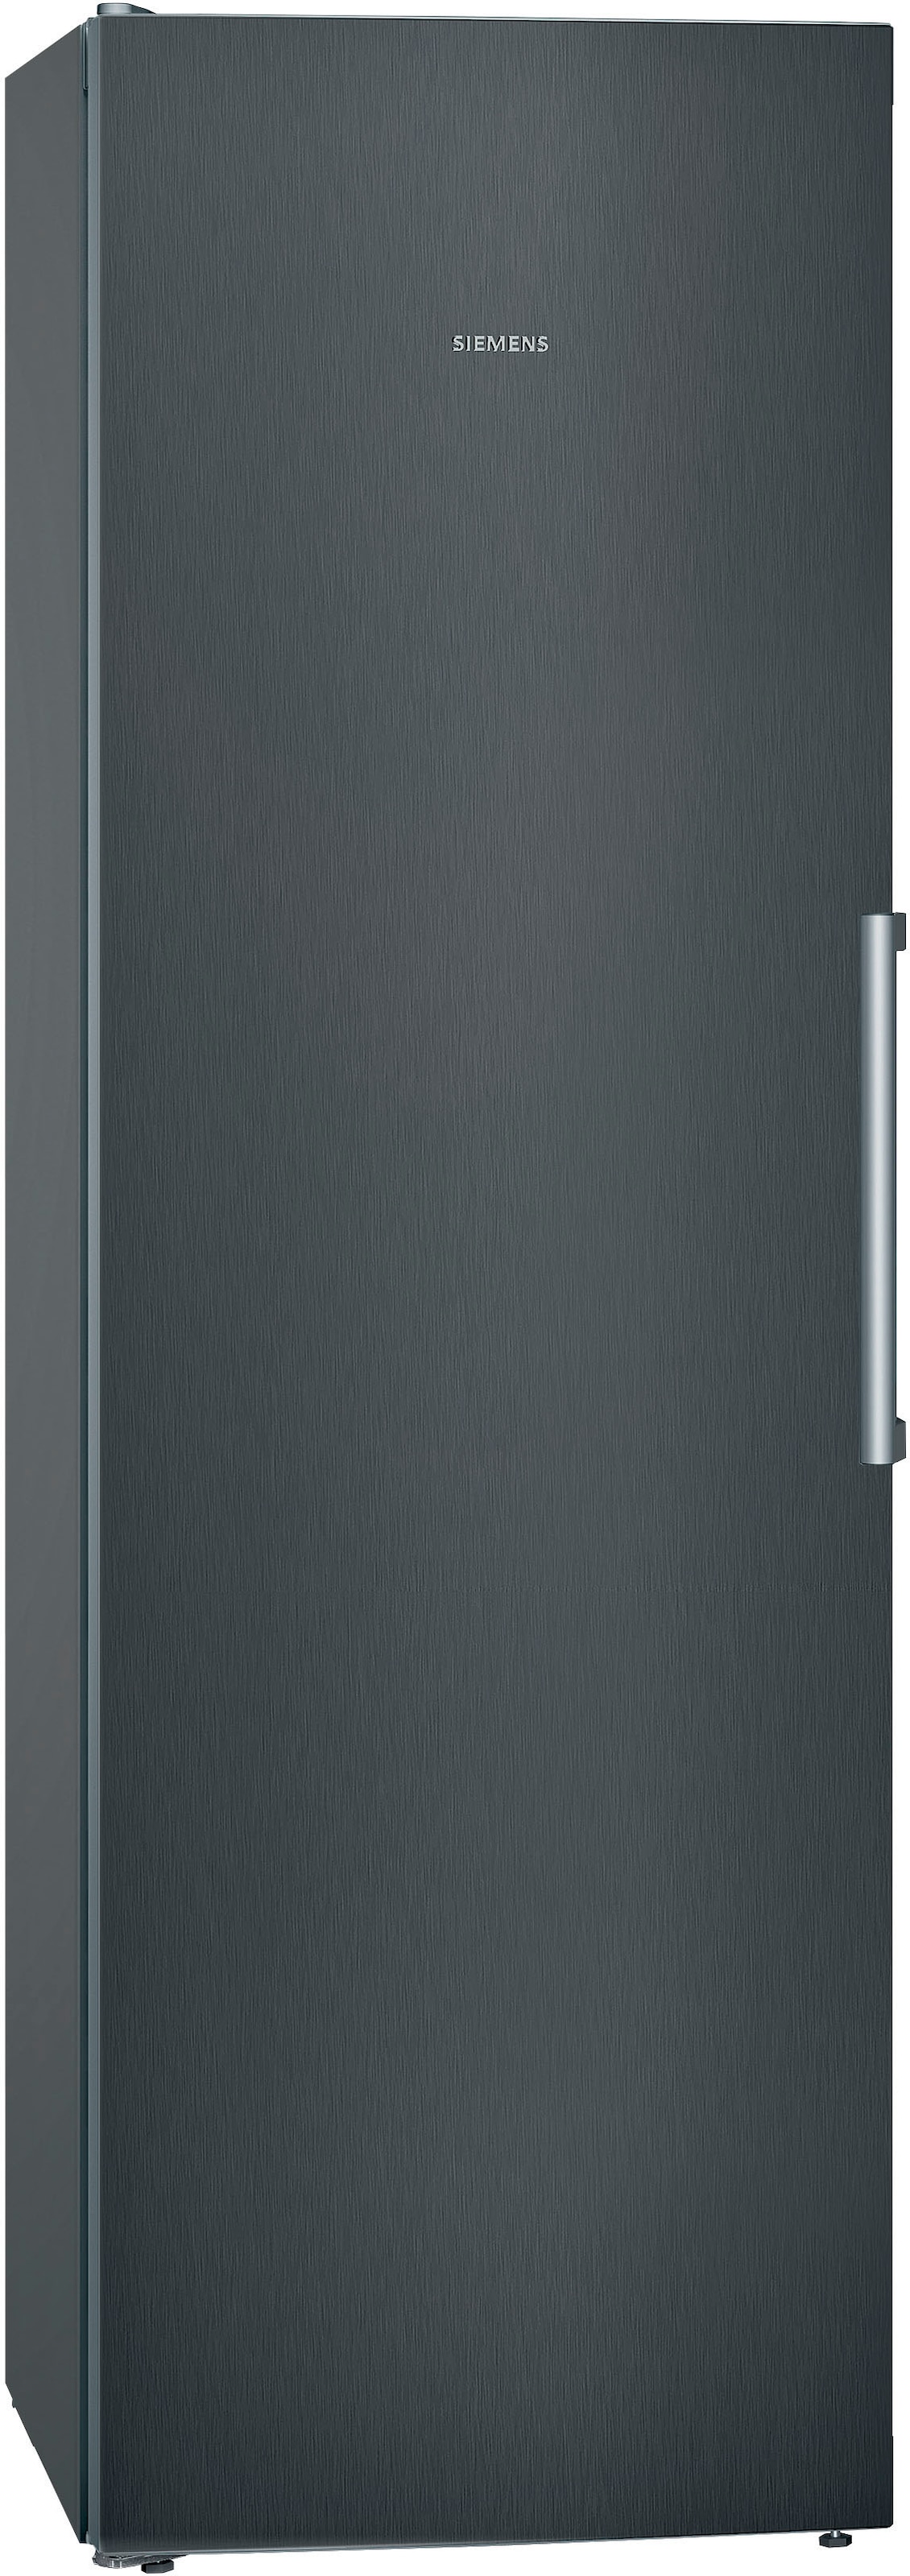 SIEMENS Kühlschrank, KS36VVXDP, 186 cm hoch, 60 cm breit